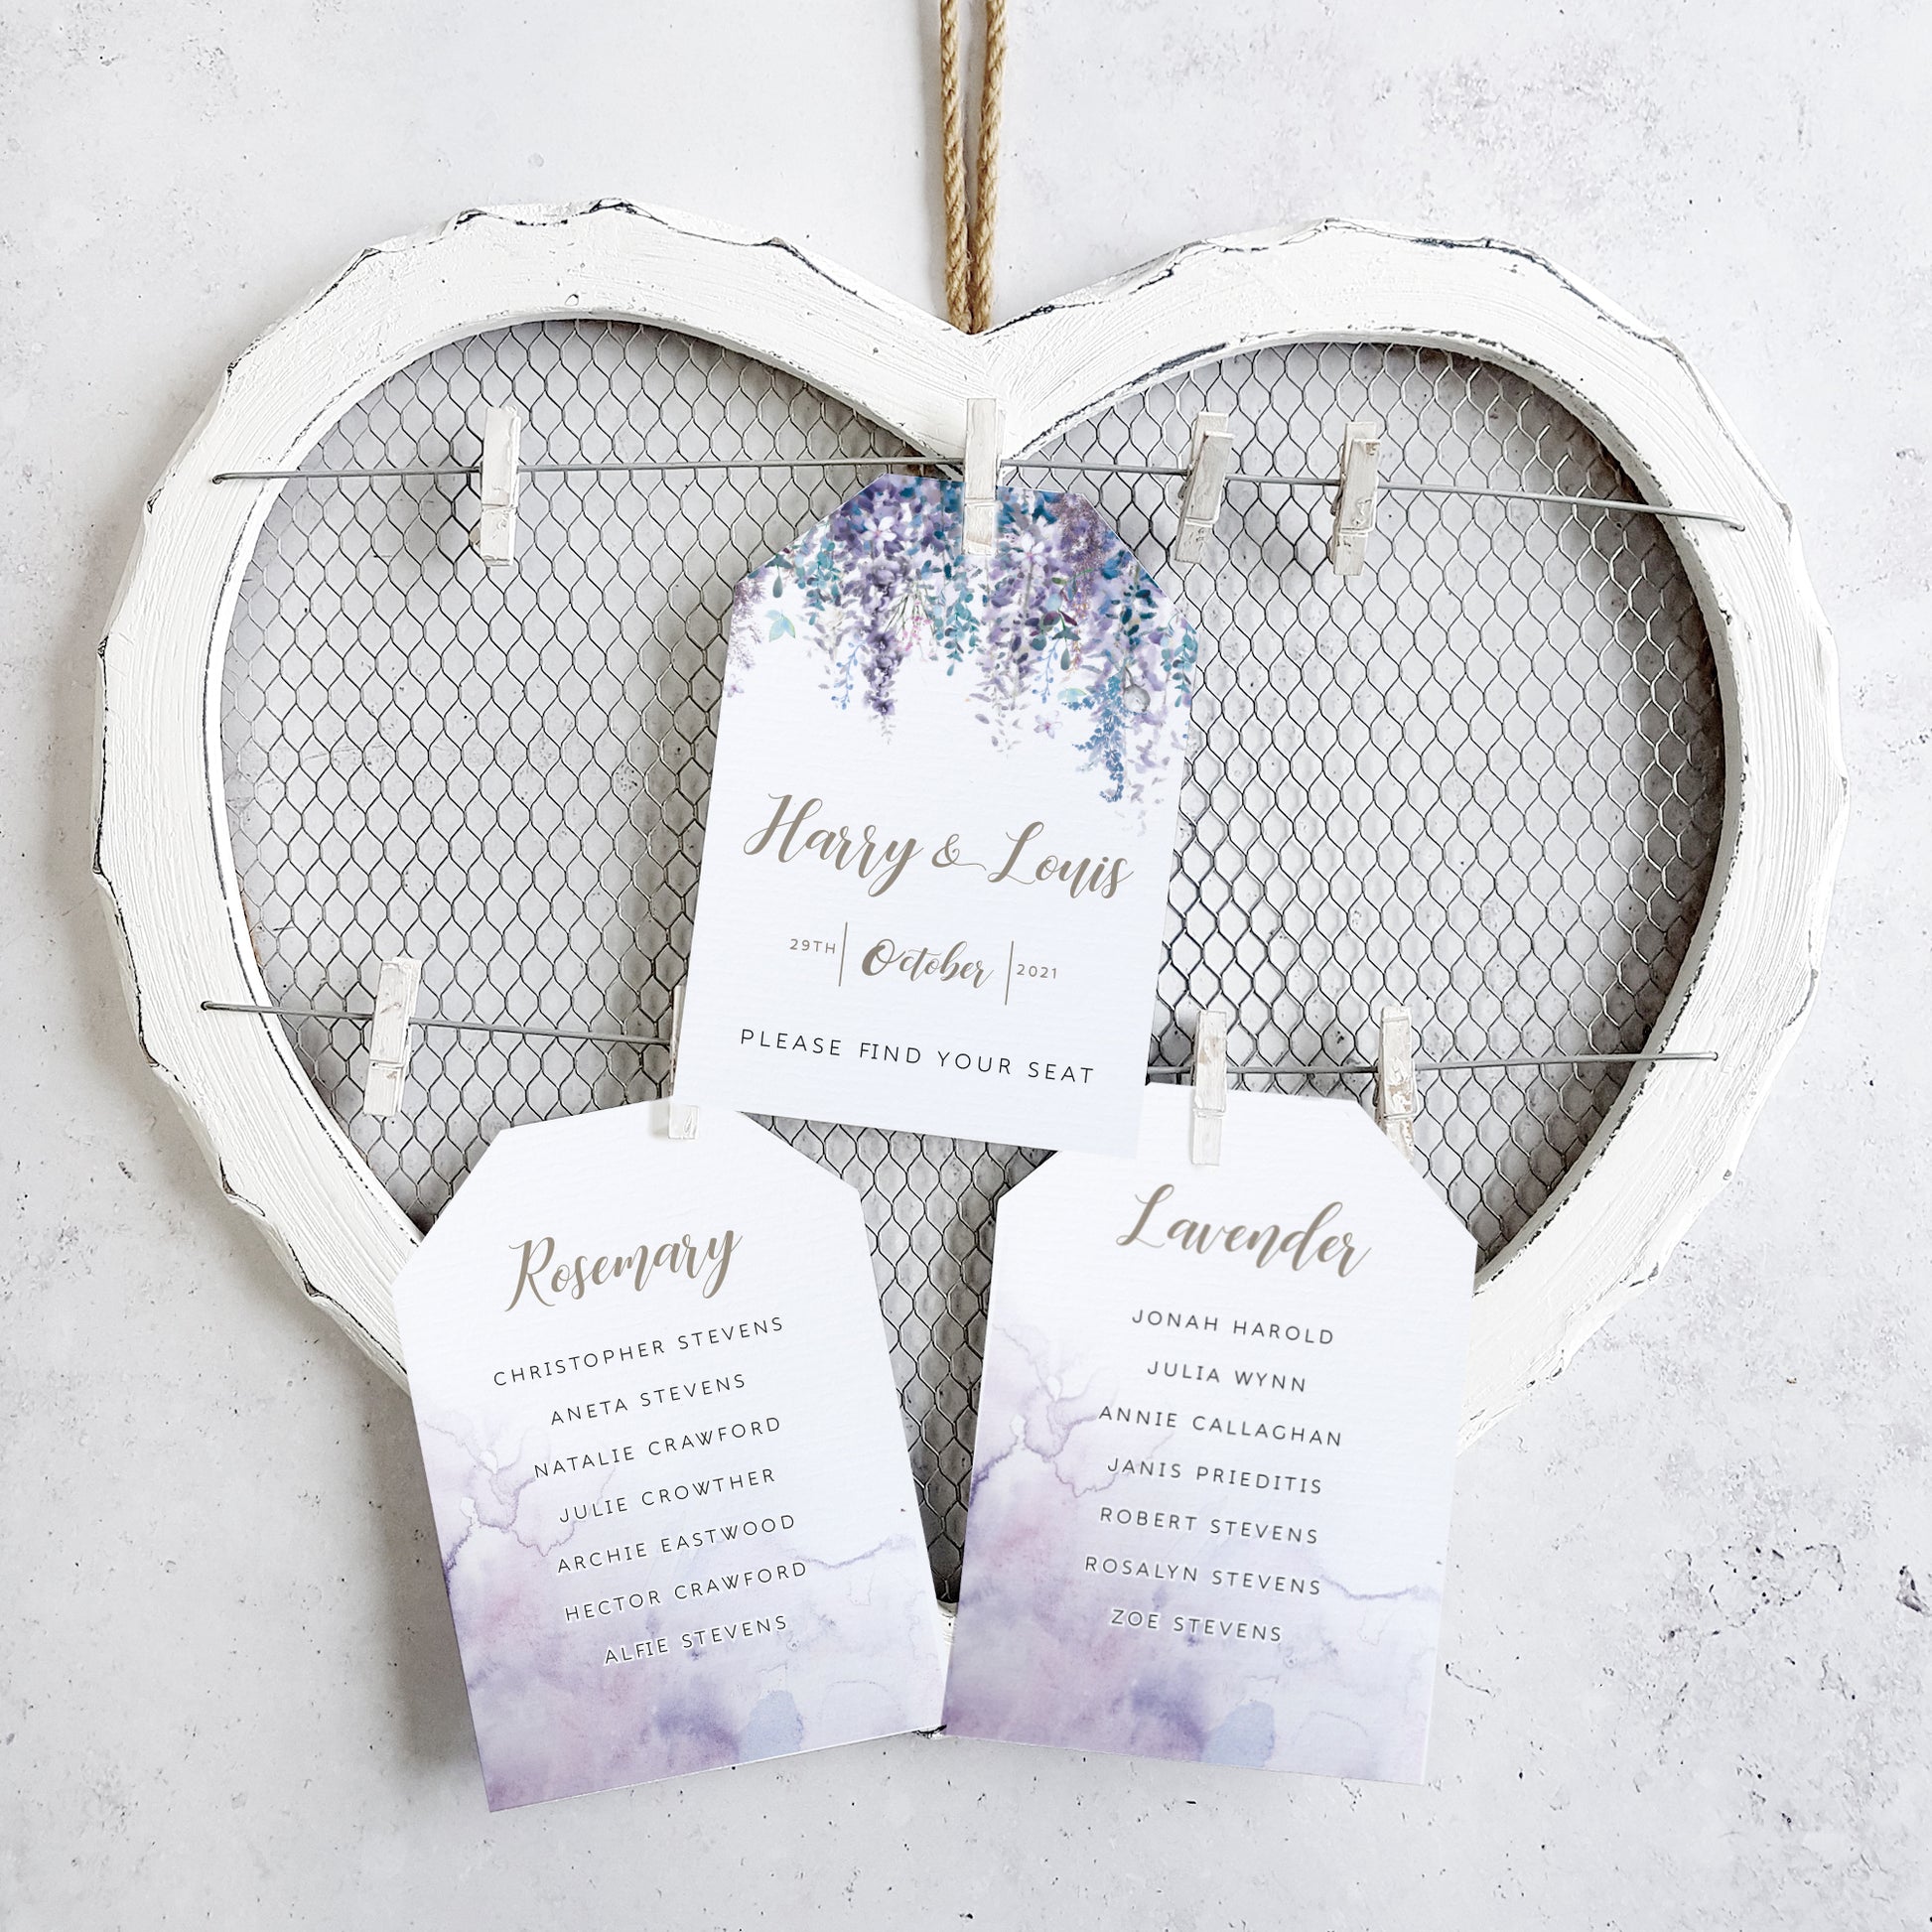 'Whimsical winter' winter wedding seating plan cards